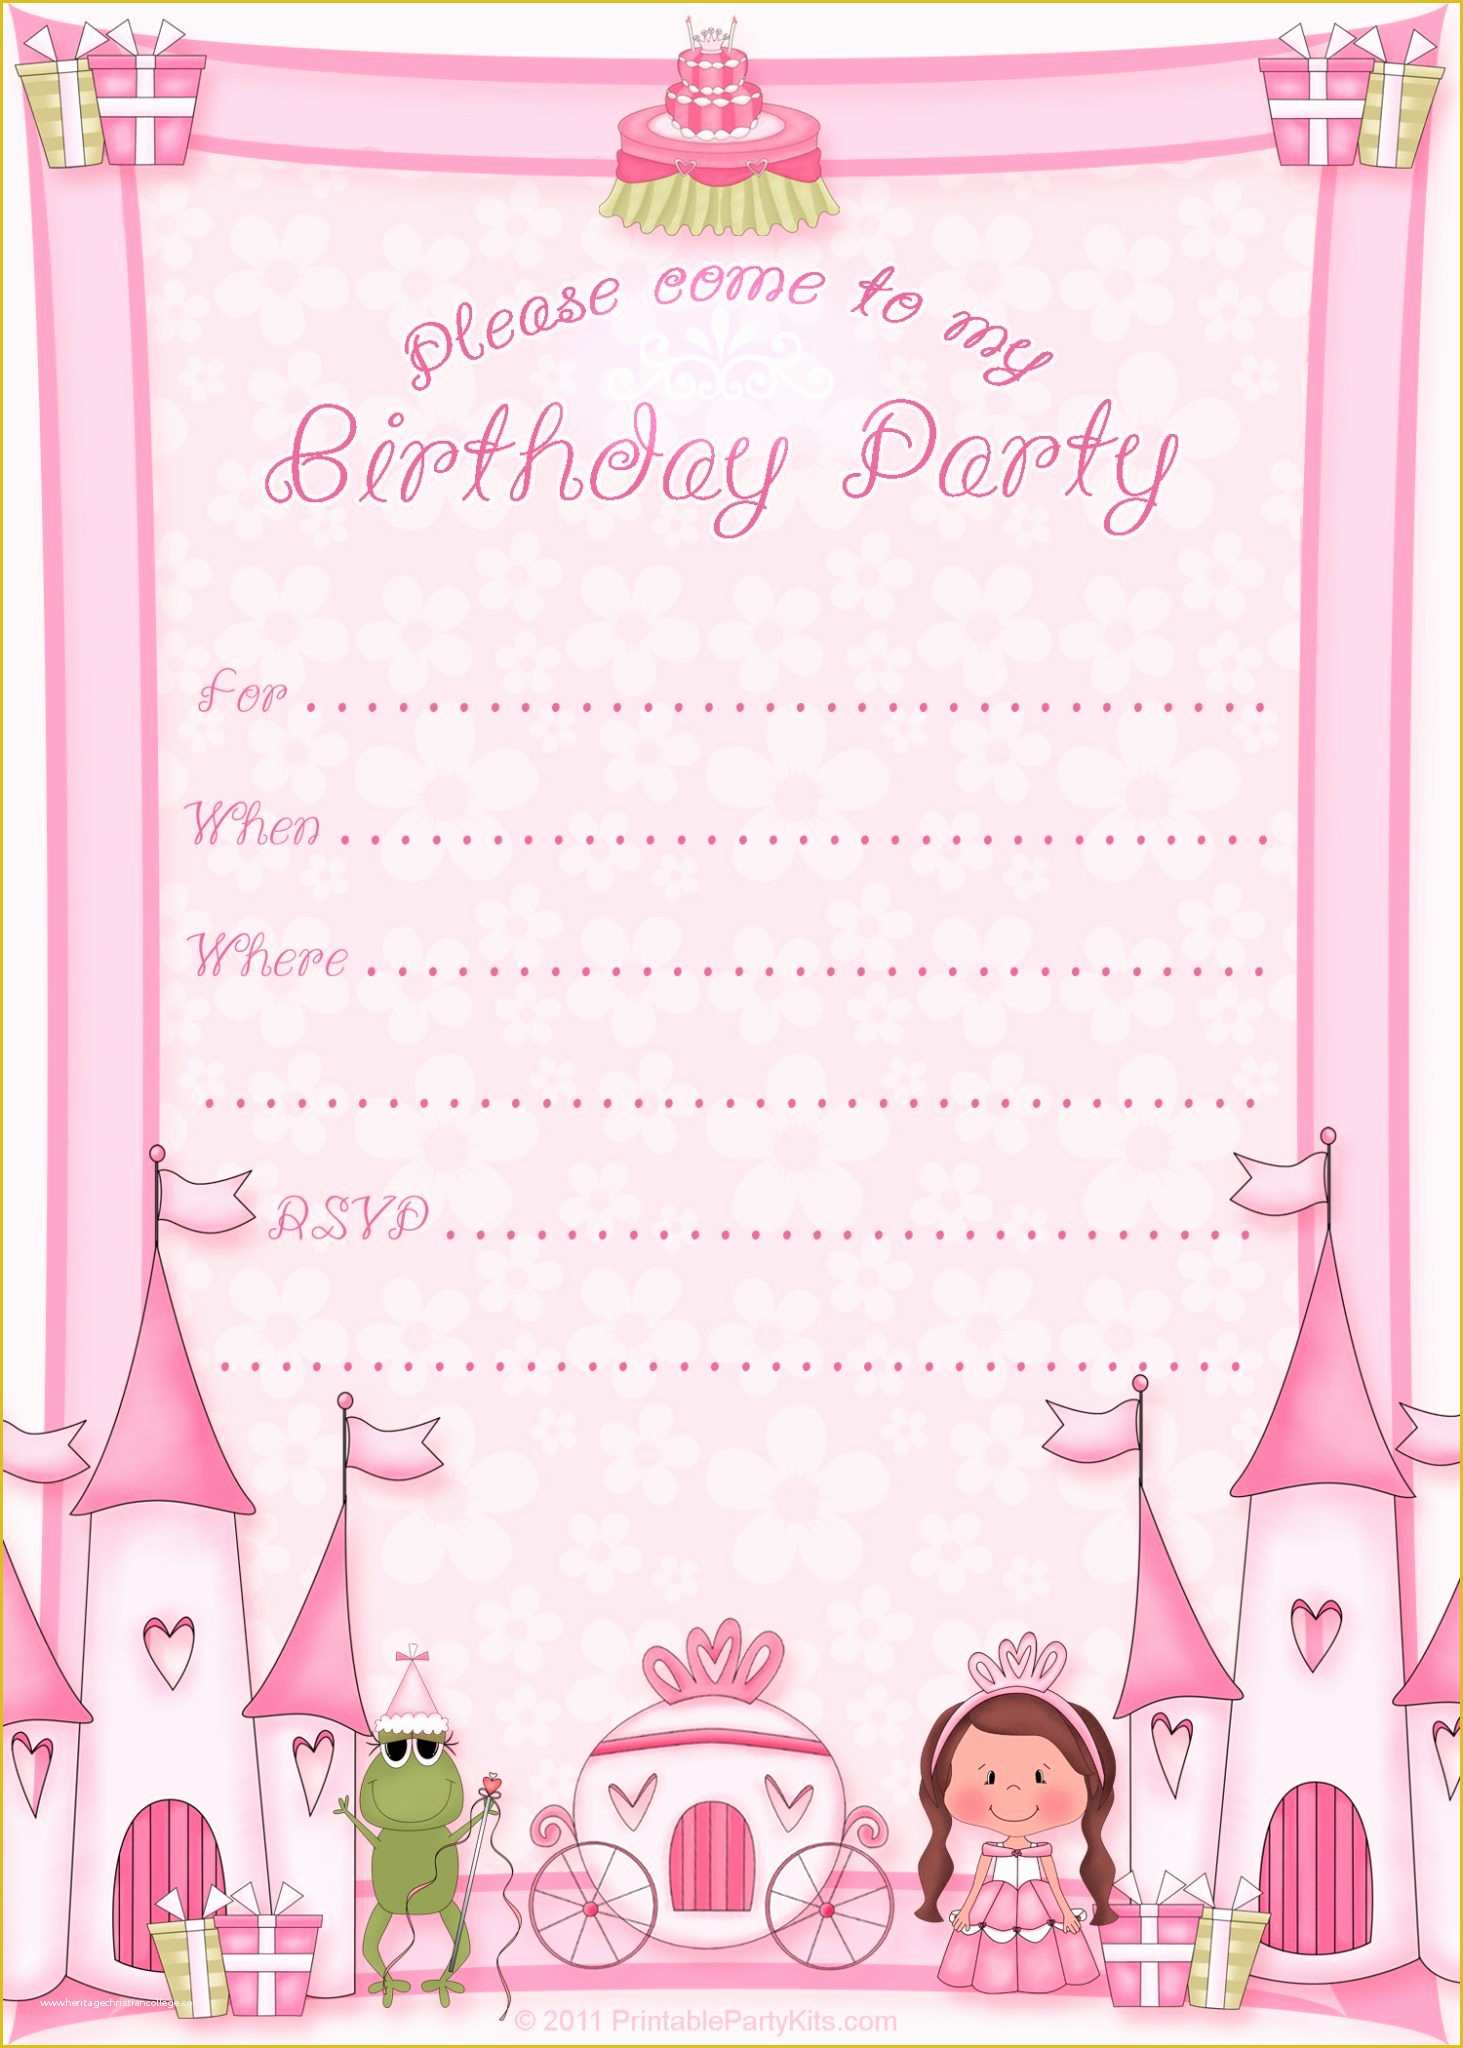 Free Printable Birthday Invitation Templates Of Princess Party Ideas On Pinterest